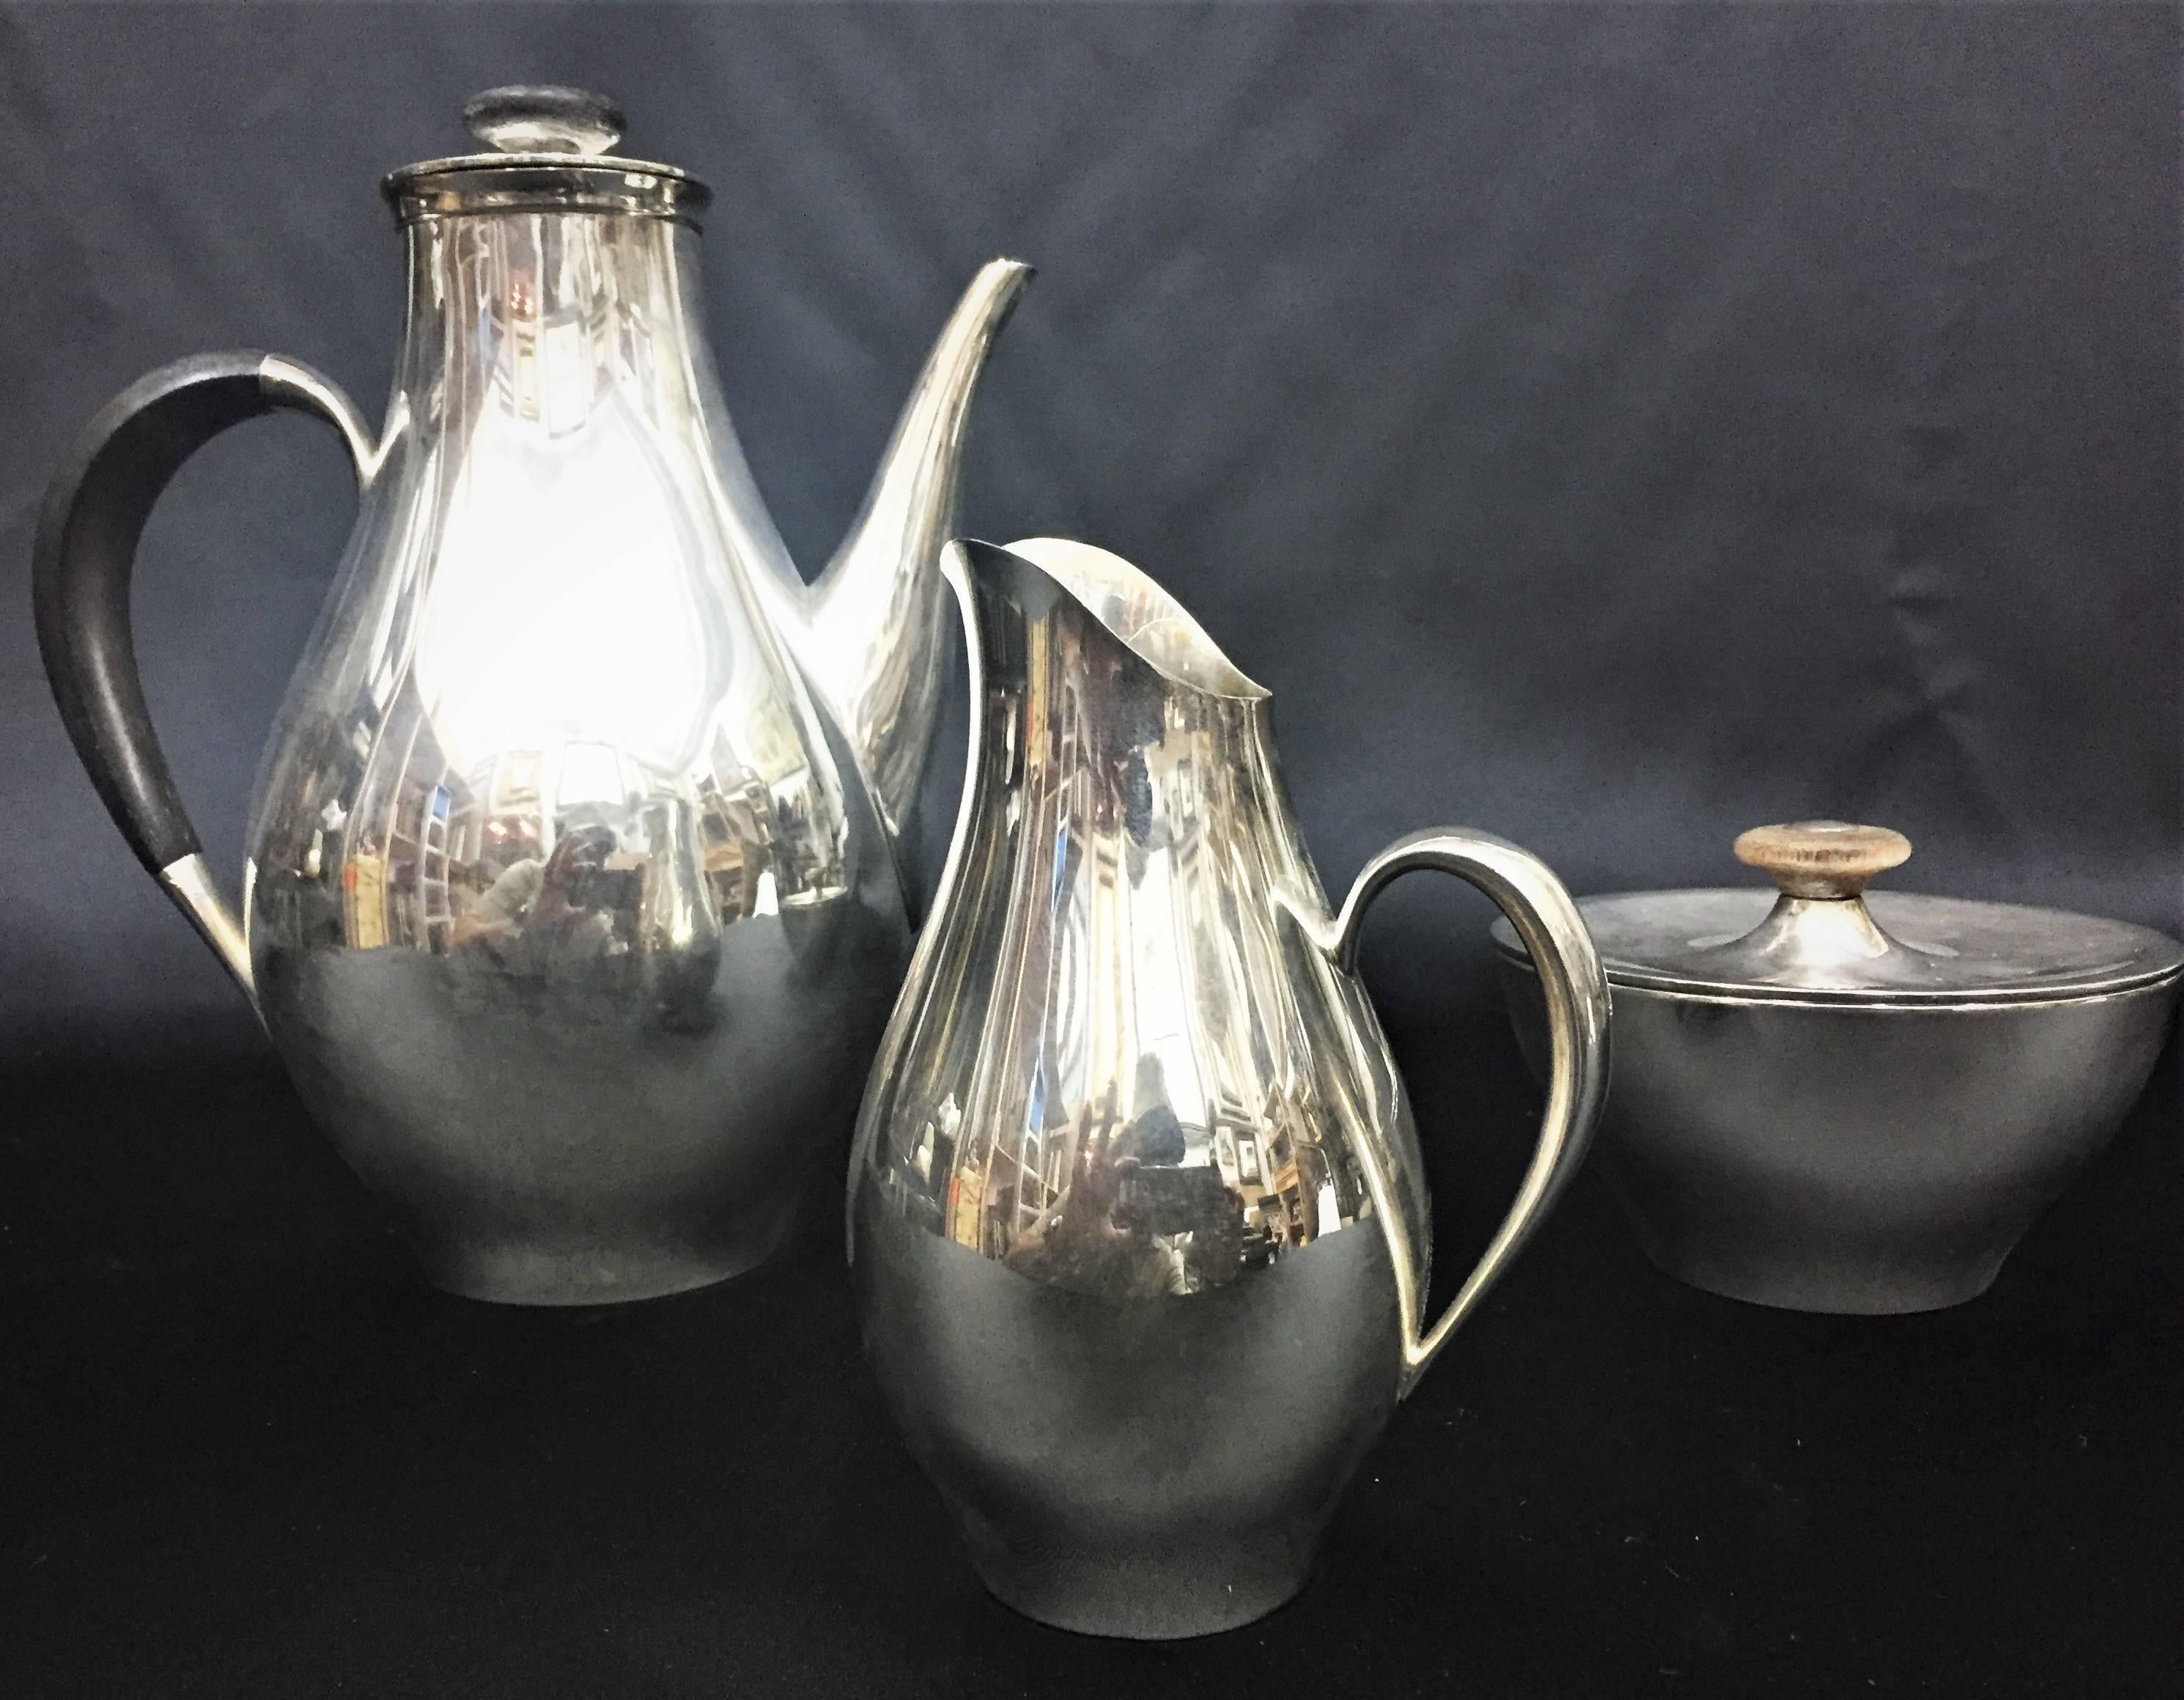 Gorham Mid-Century Modern sterling silver trio coffee service, circa 1950s.
Measures: Coffee pot:
Height 8.75”
width 7.75”
weight 22oz

Creamer:
Height 5.25”
width 3.75”
weight 5.6oz

Sugar bowl: 
Height: 3”
width: 4.3”
weight: